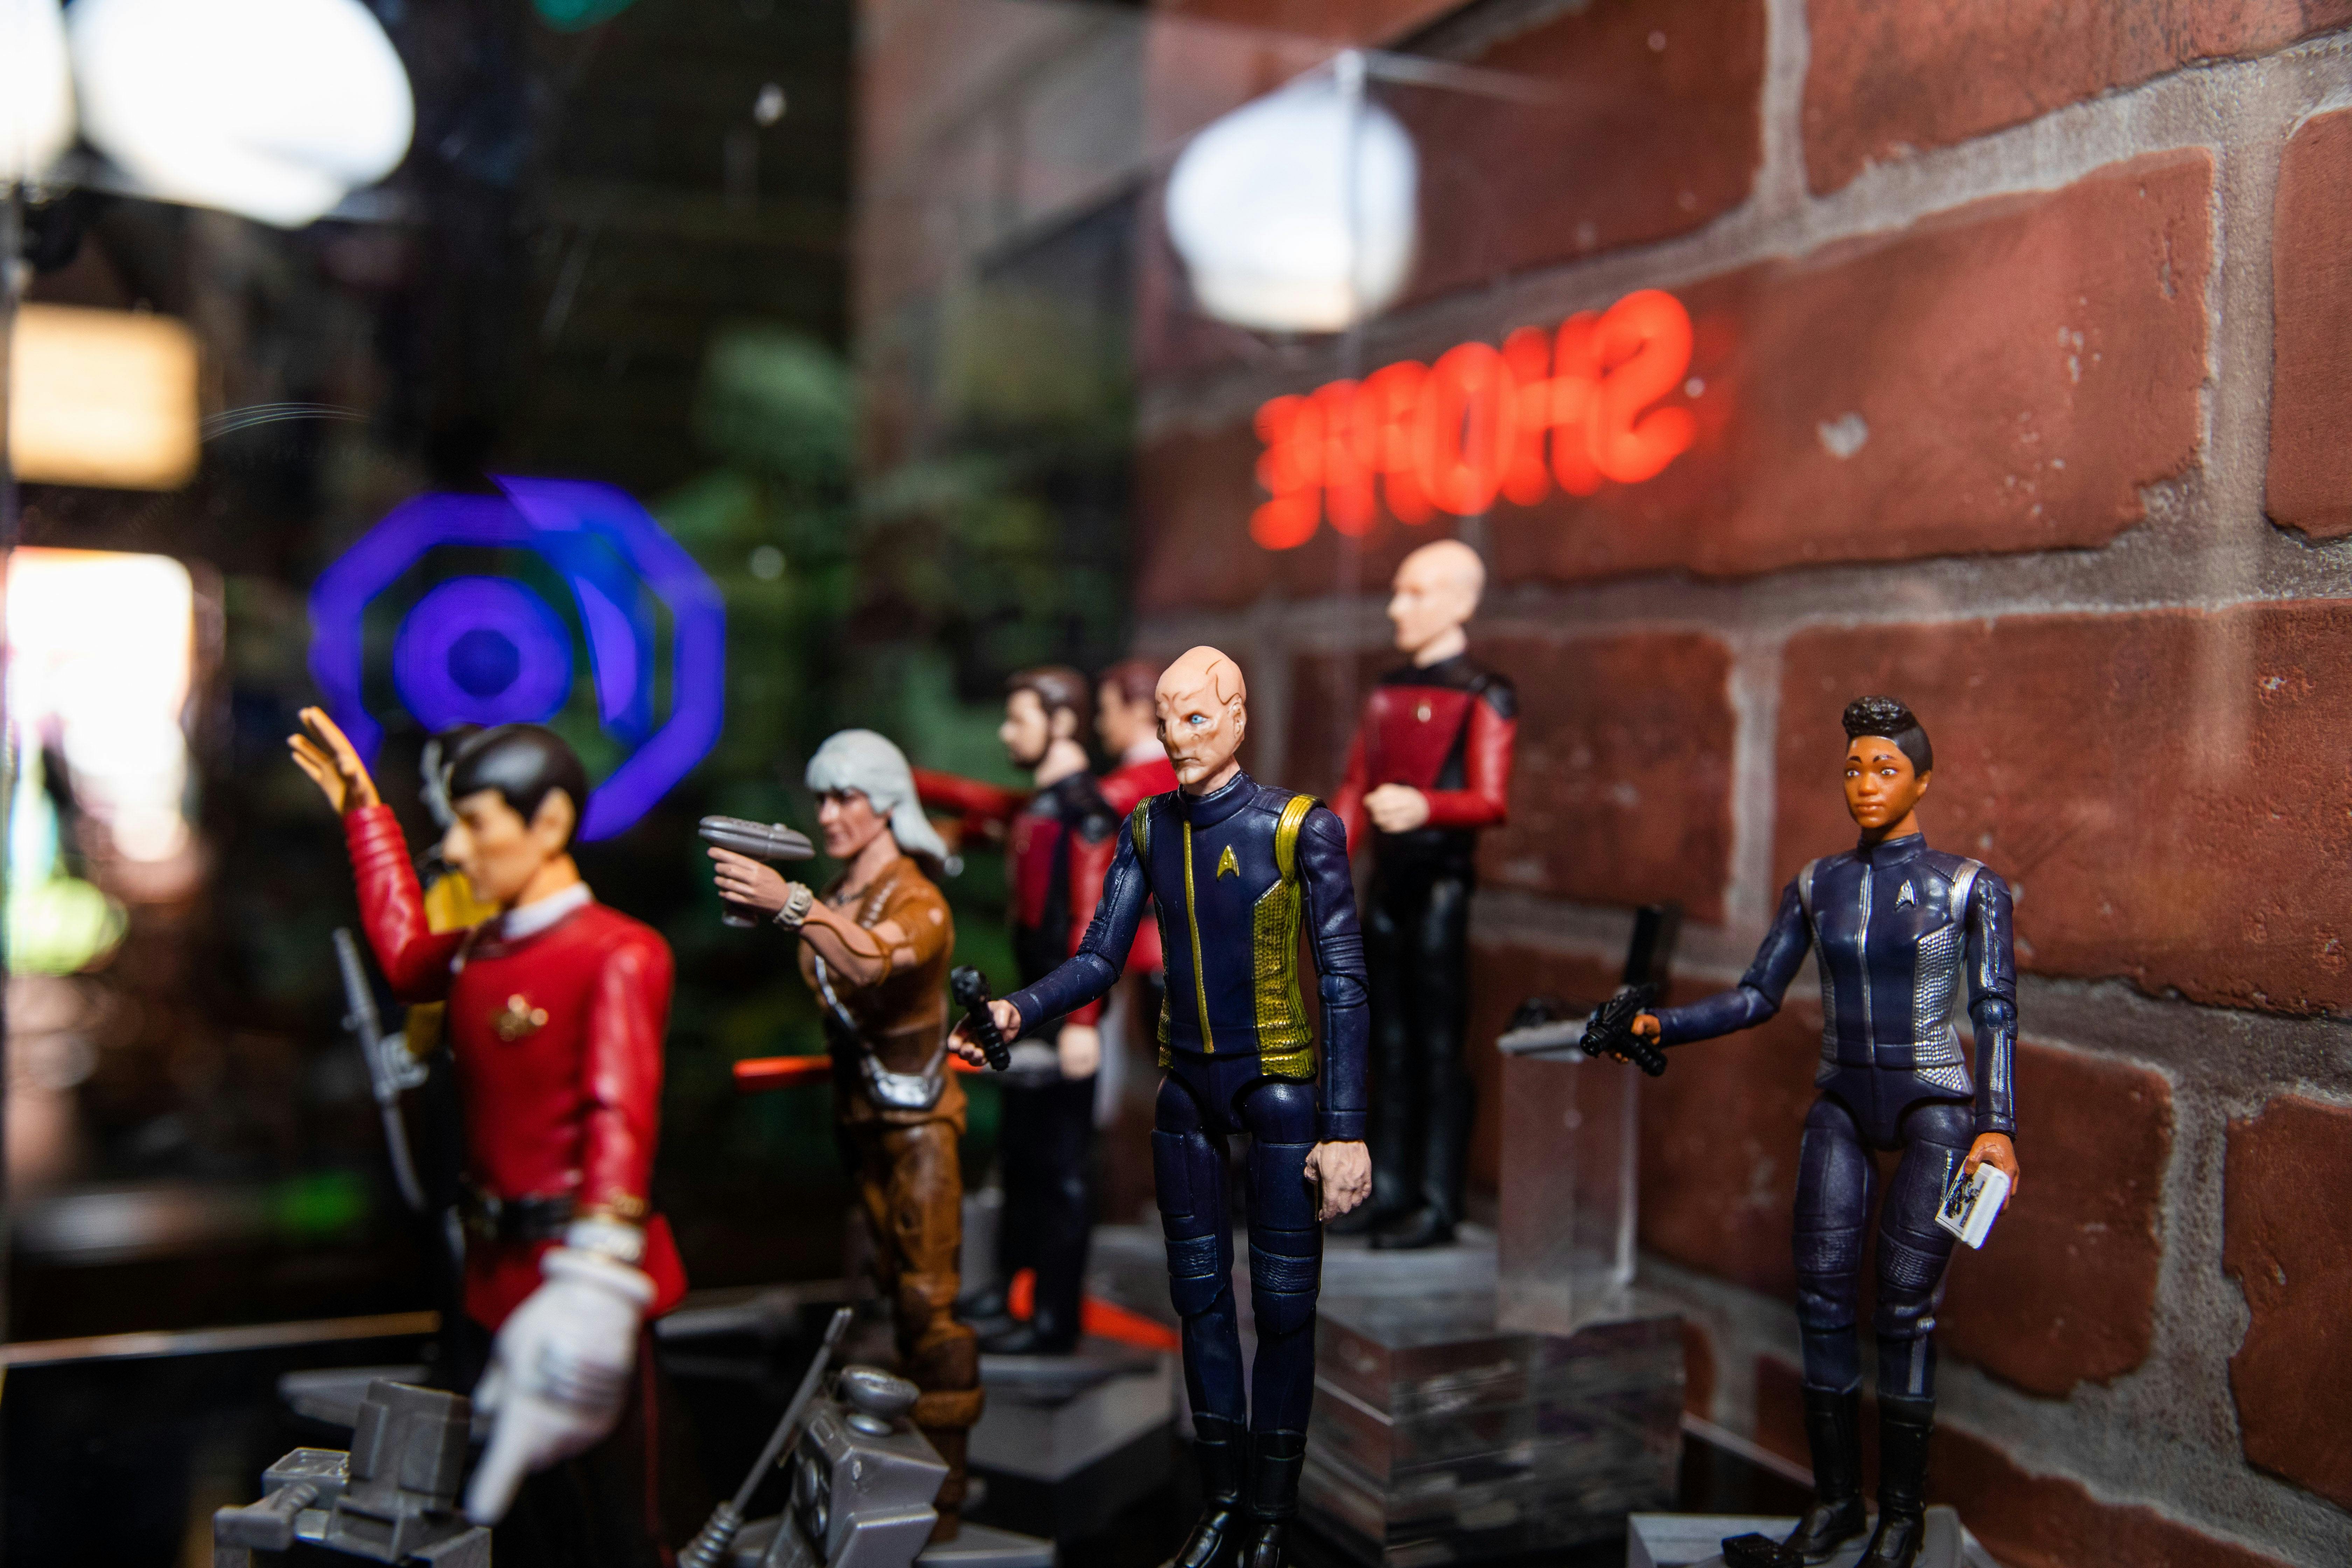 Several Star Trek action figures on display at 10-Forward.